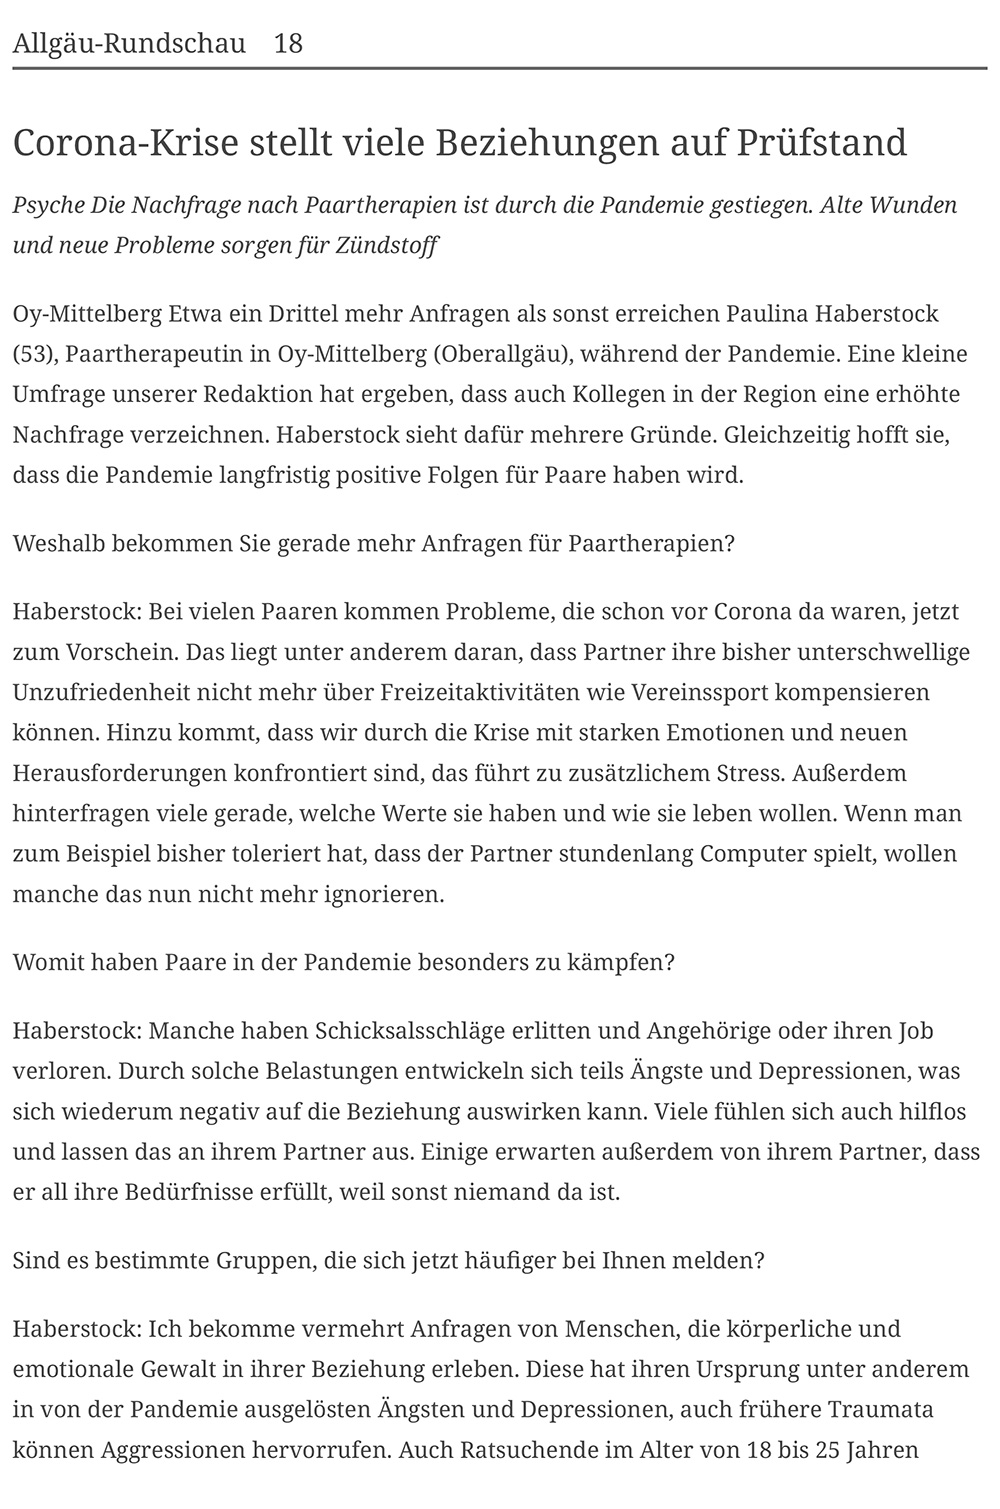 Allgäuer Zeitung Paulina Haberstock